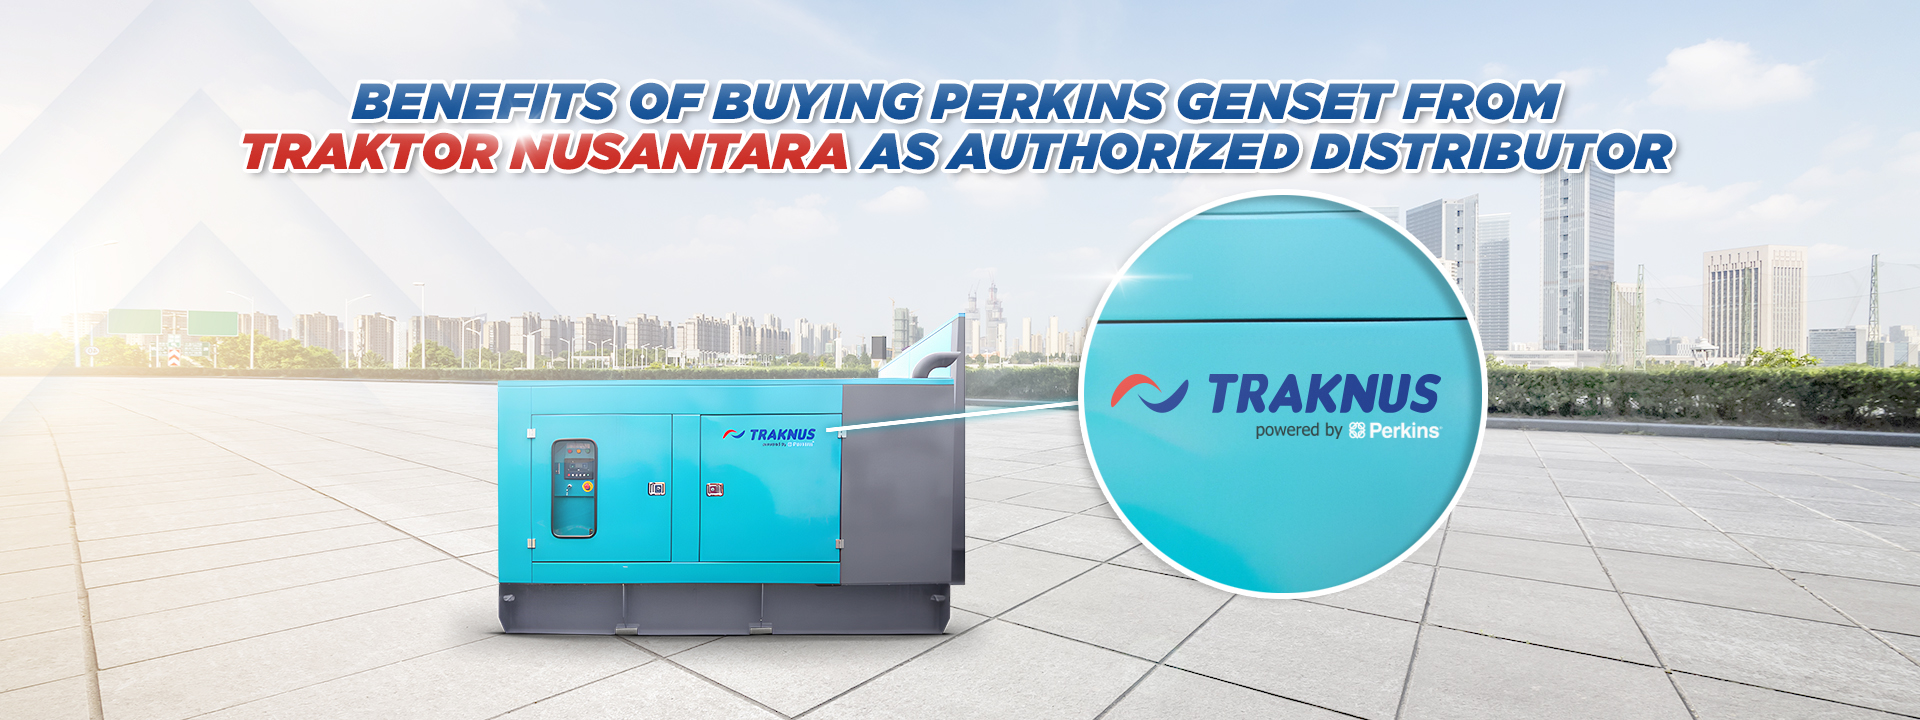 Benefits of buying perkins genset from traktor nusantara as an authorized distributor